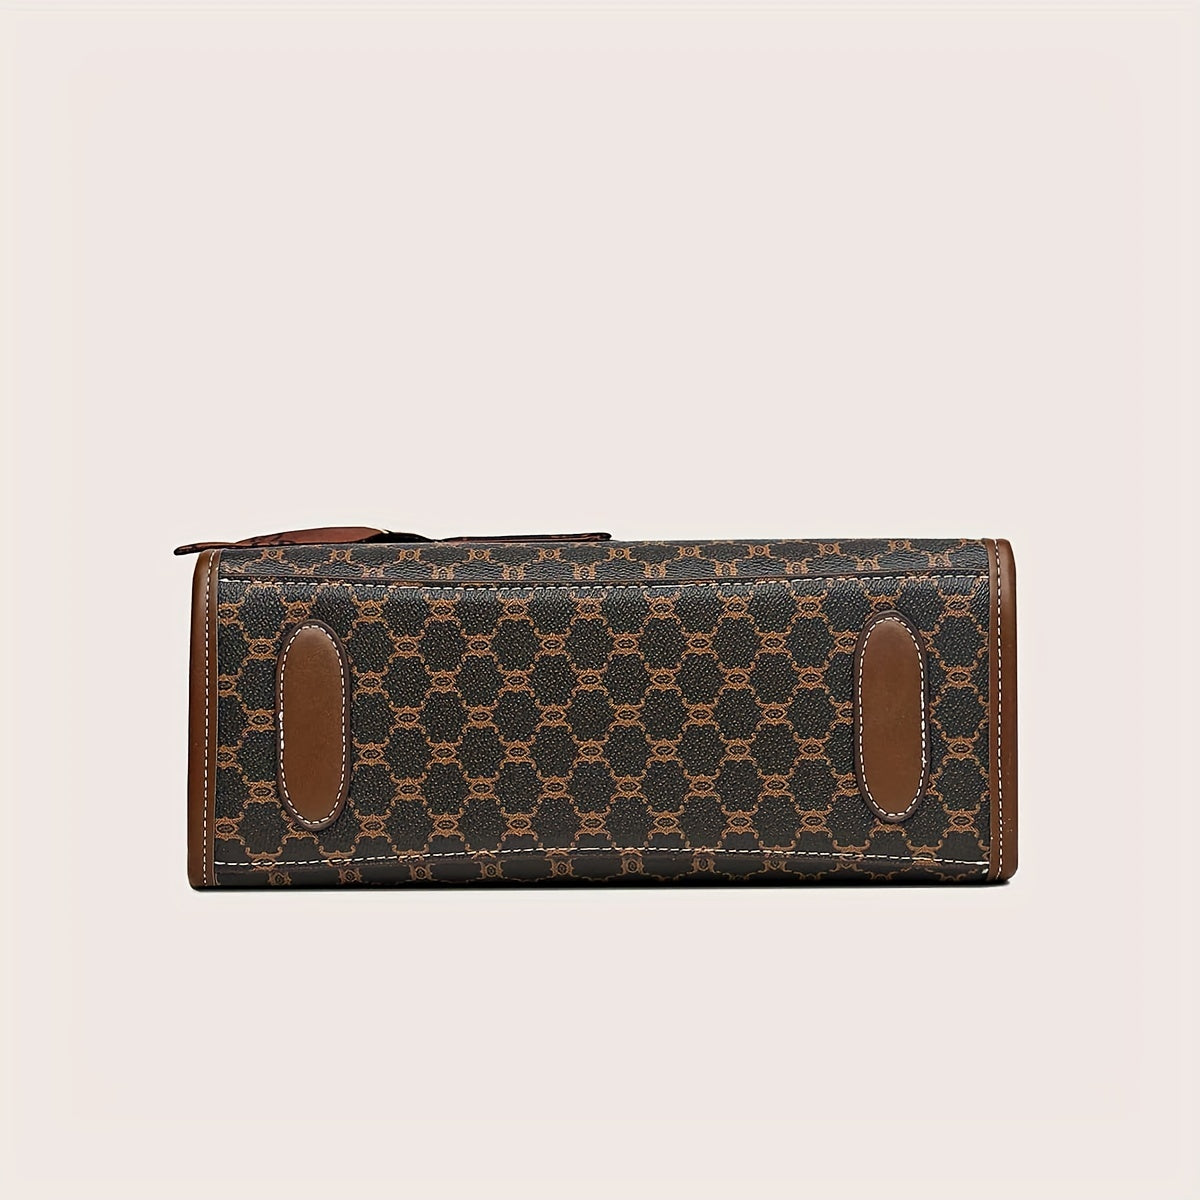 Women's 3 Pcs Classic Elegant Bag Set : Retro Geometric Pattern Tote Bag With Scarf Decor, Buckle Decor Square Purse & Credit Card Case